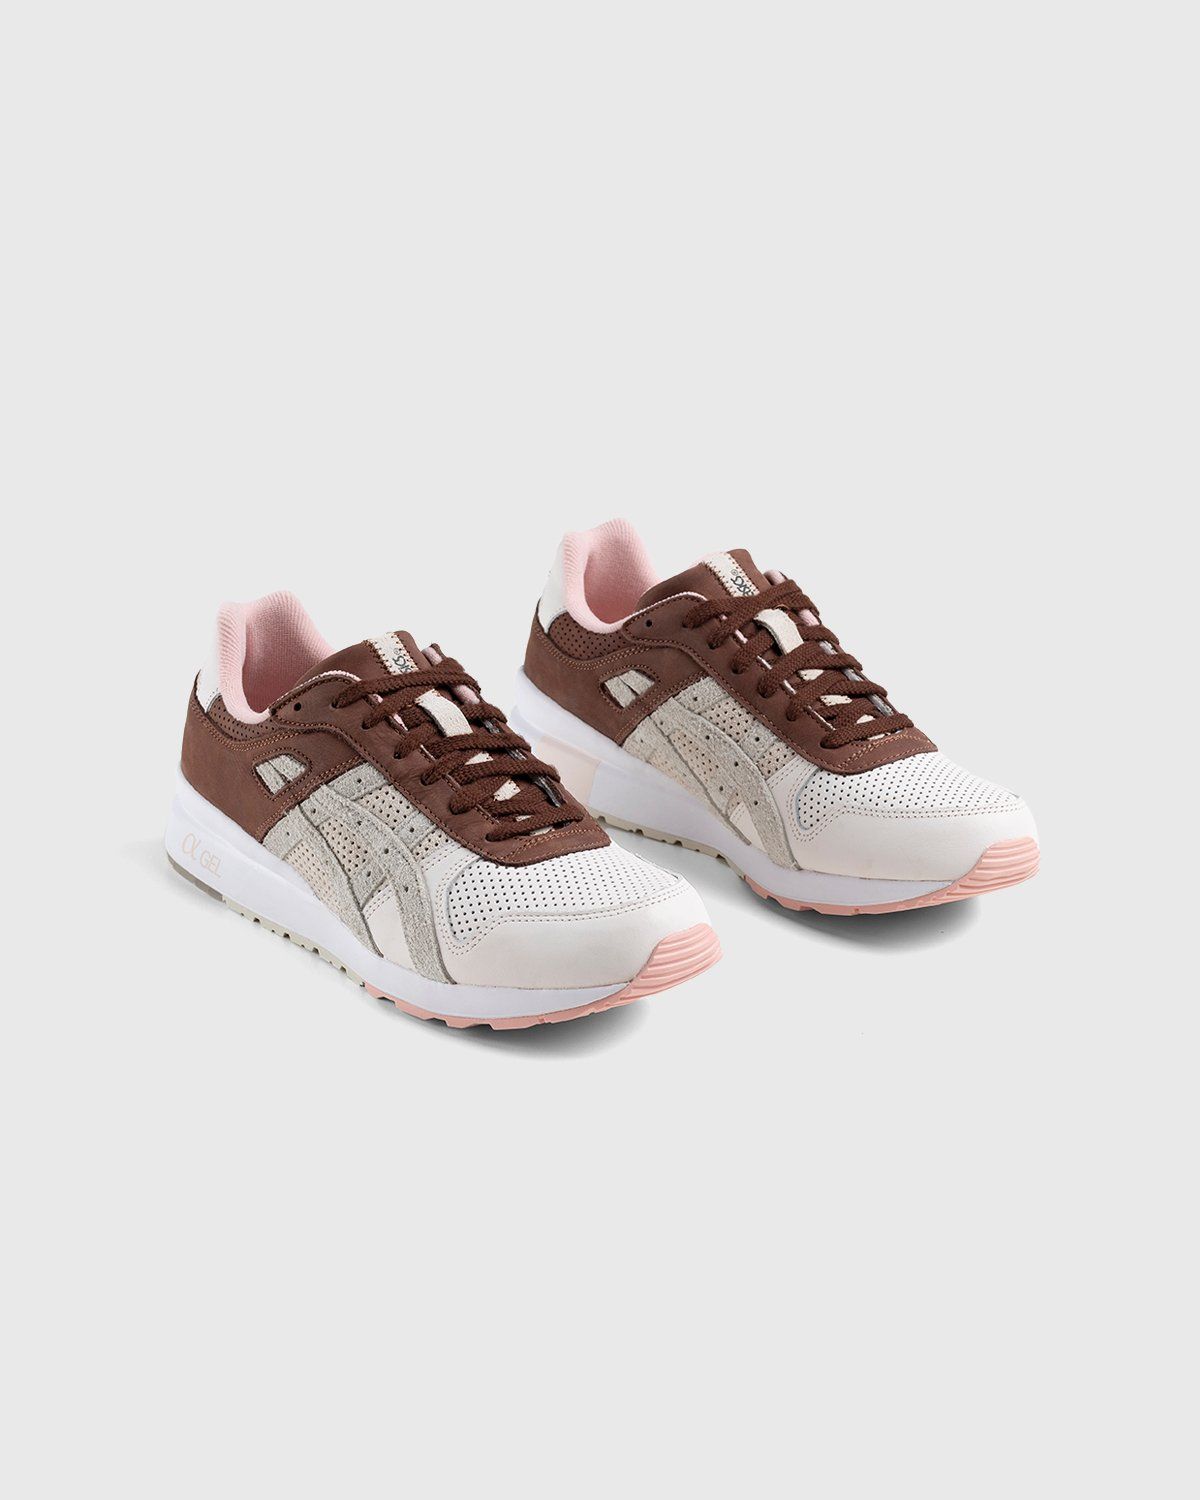 asics x Afew – GT-II Blush/Chocolate Brown - Low Top Sneakers - Pink - Image 3